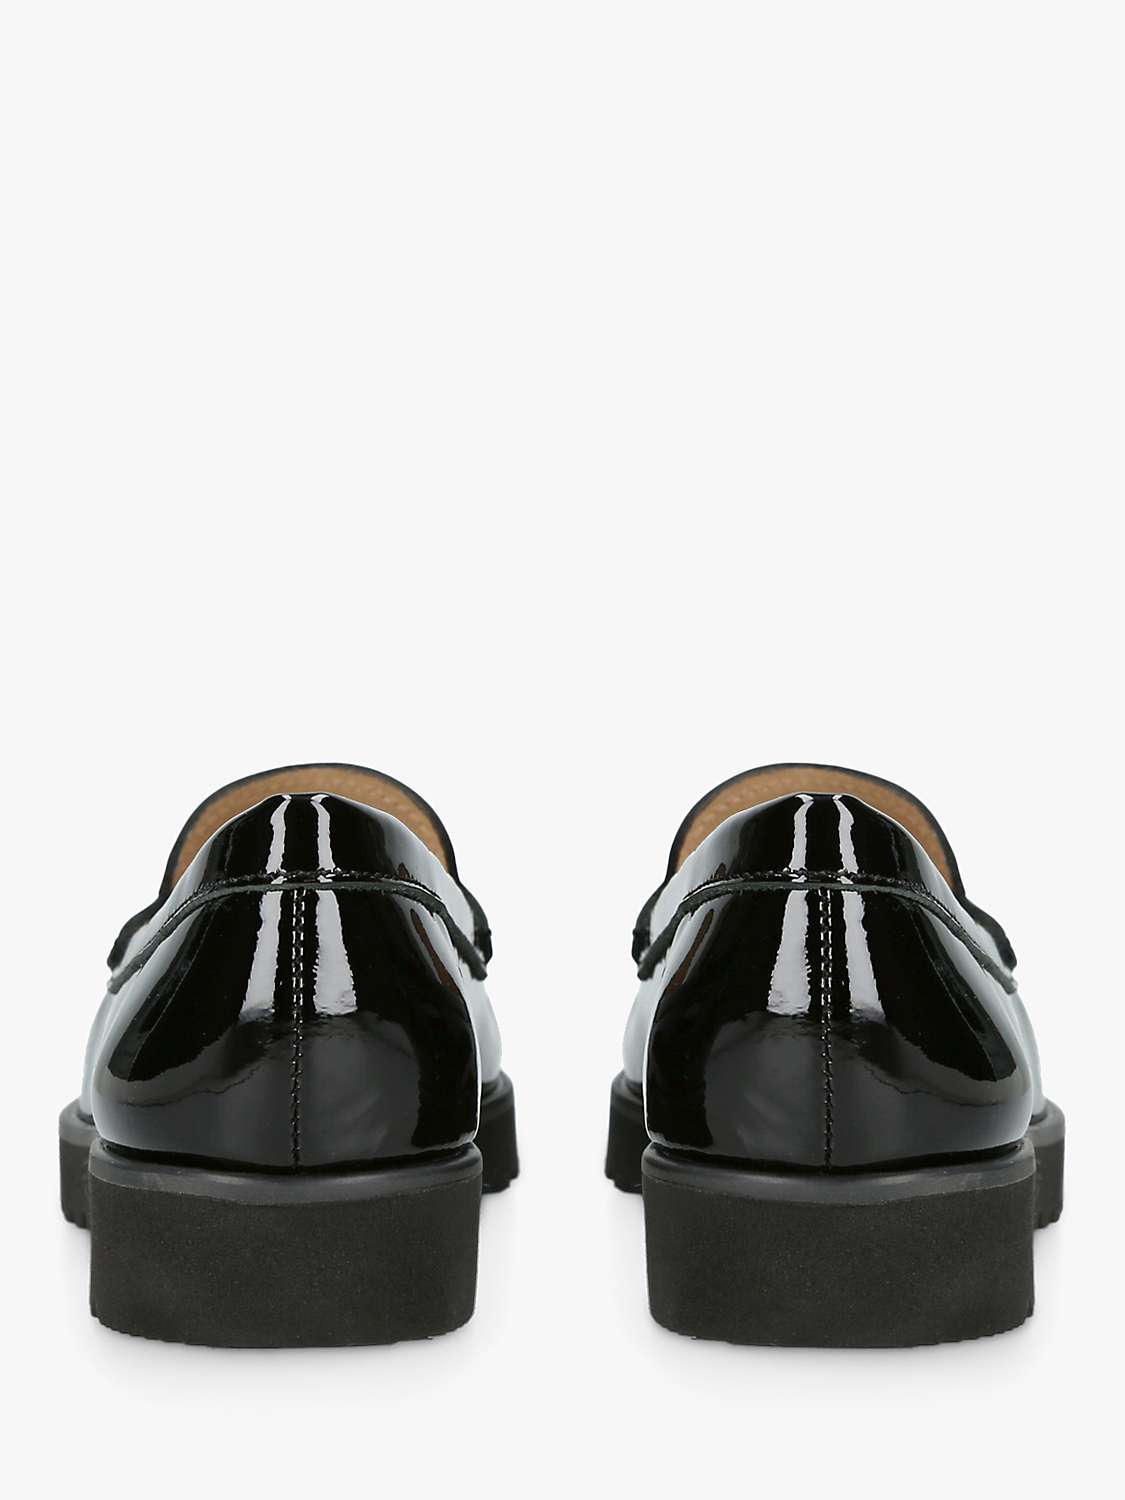 Kurt Geiger London Holland Patent Leather Loafers, Black at John Lewis ...